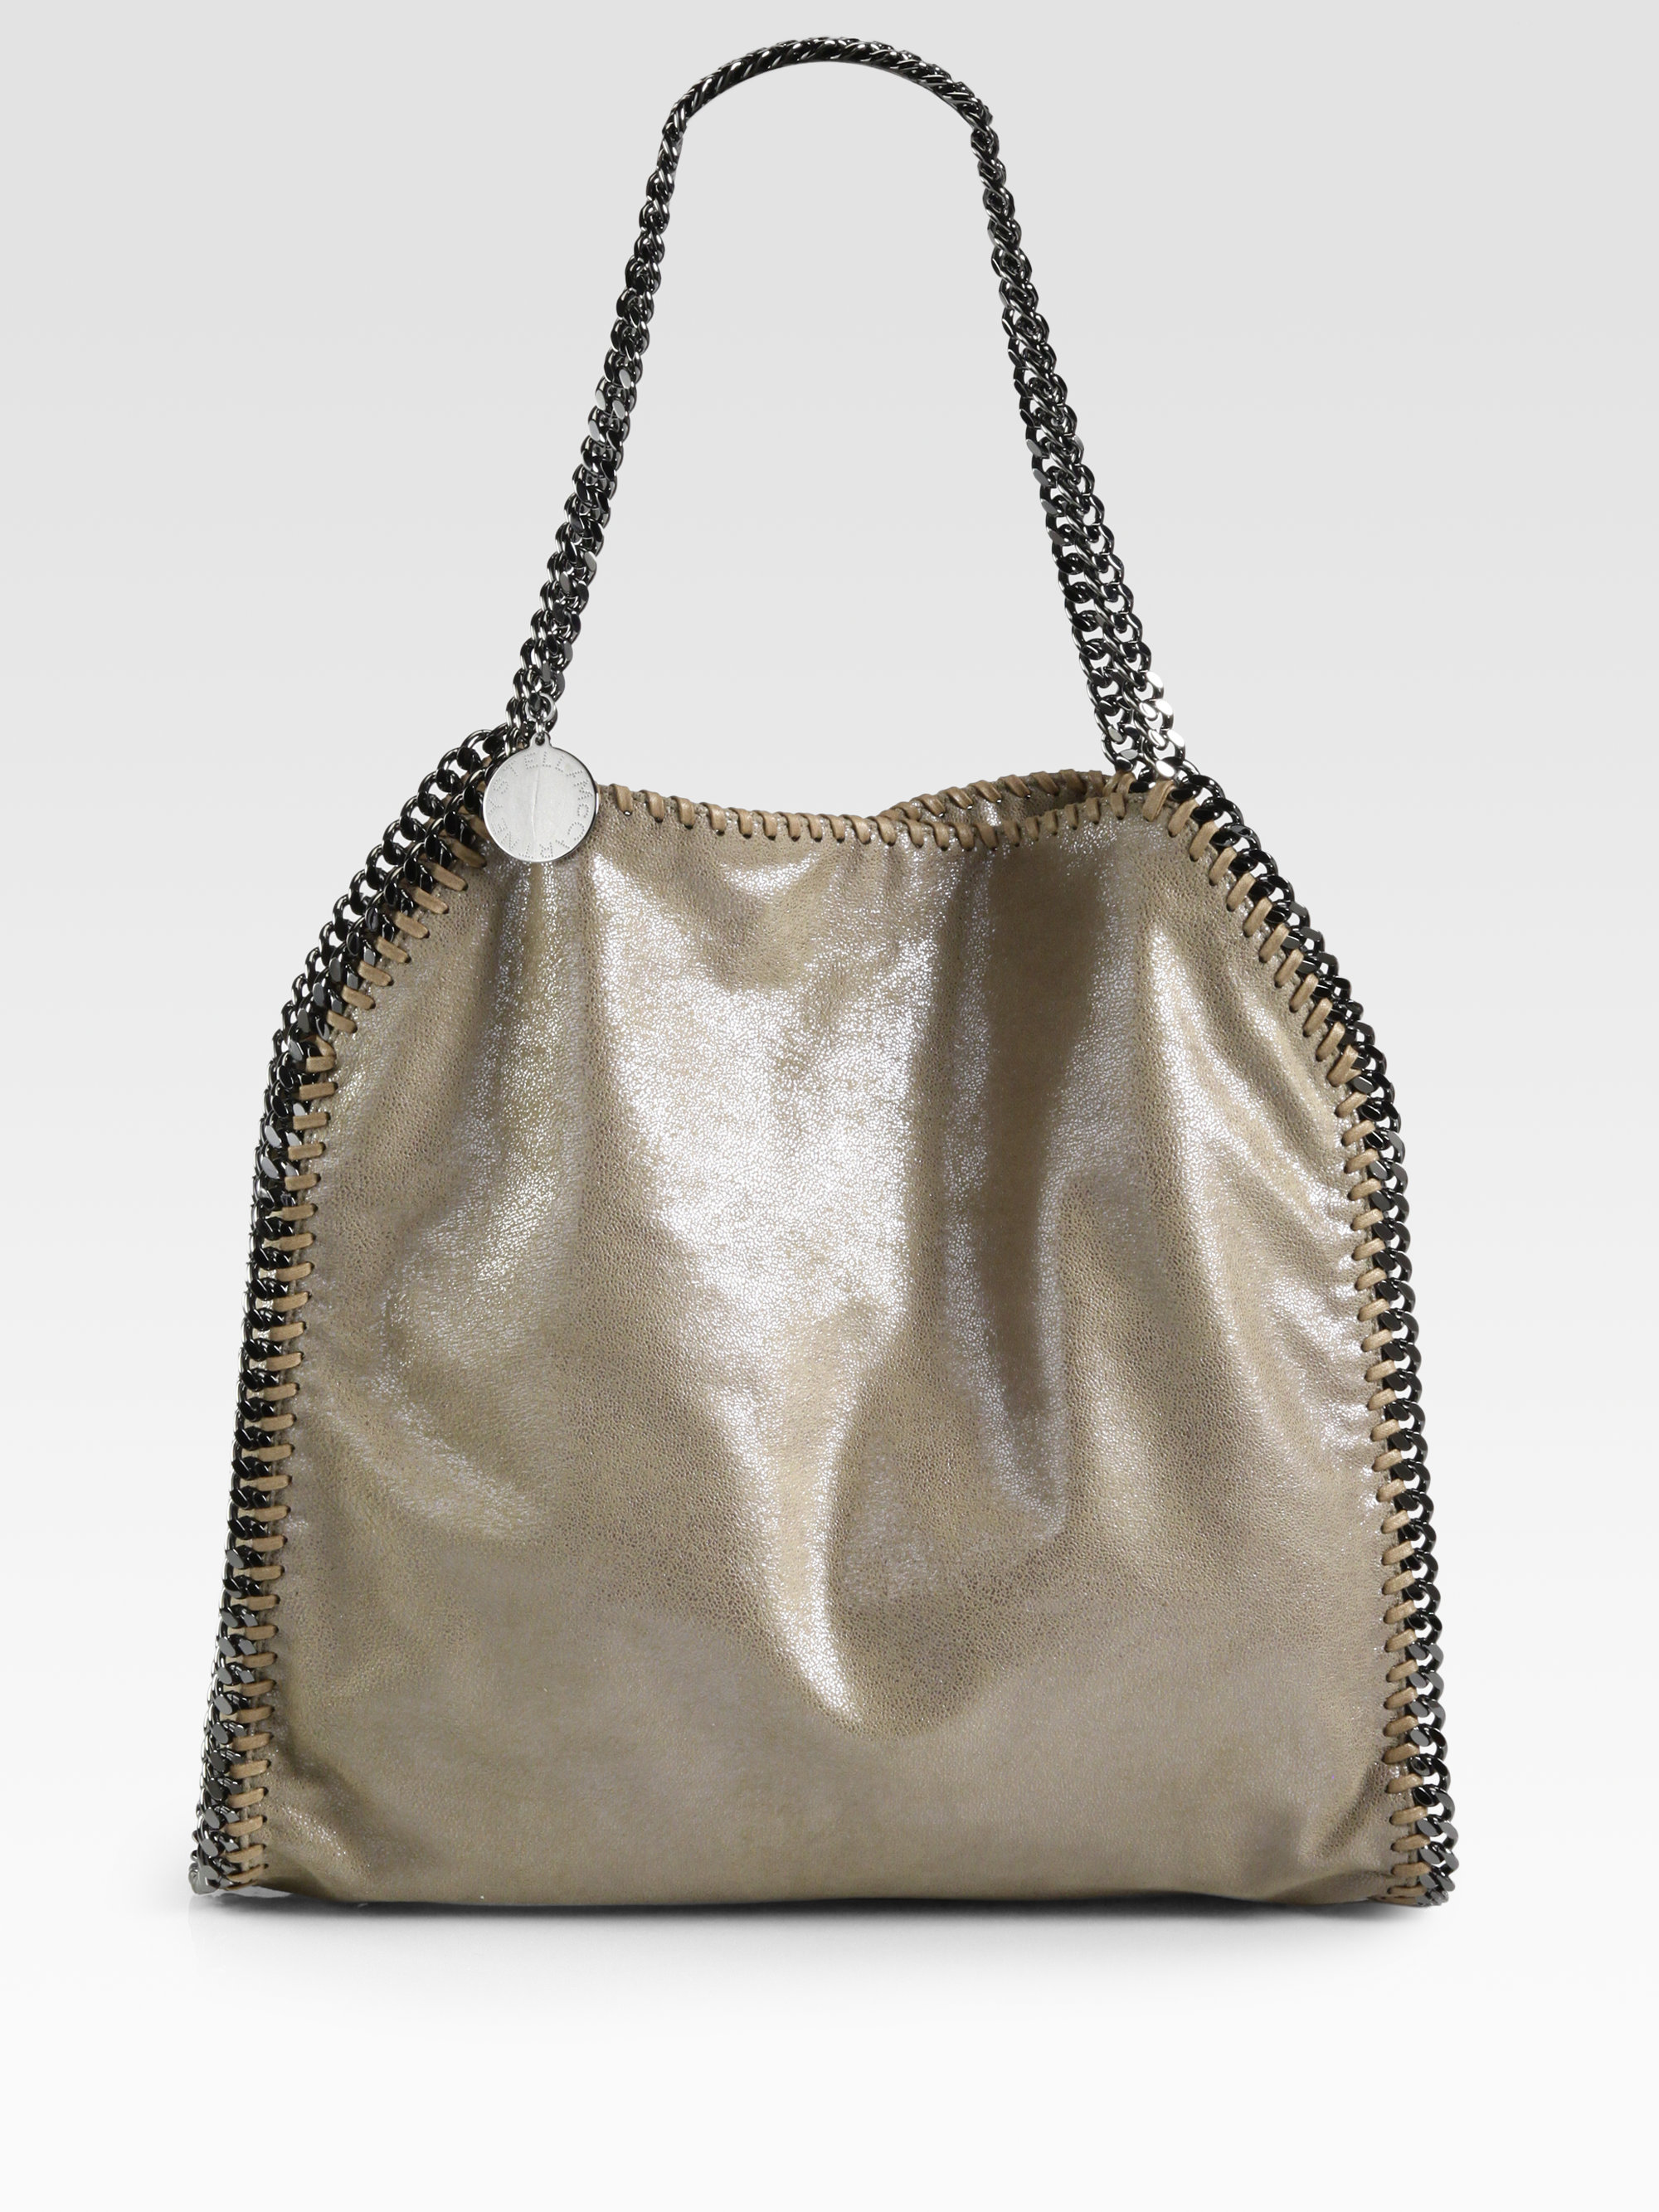 Stella McCartney bags. Stella Mccartney women's handbag shopping bag